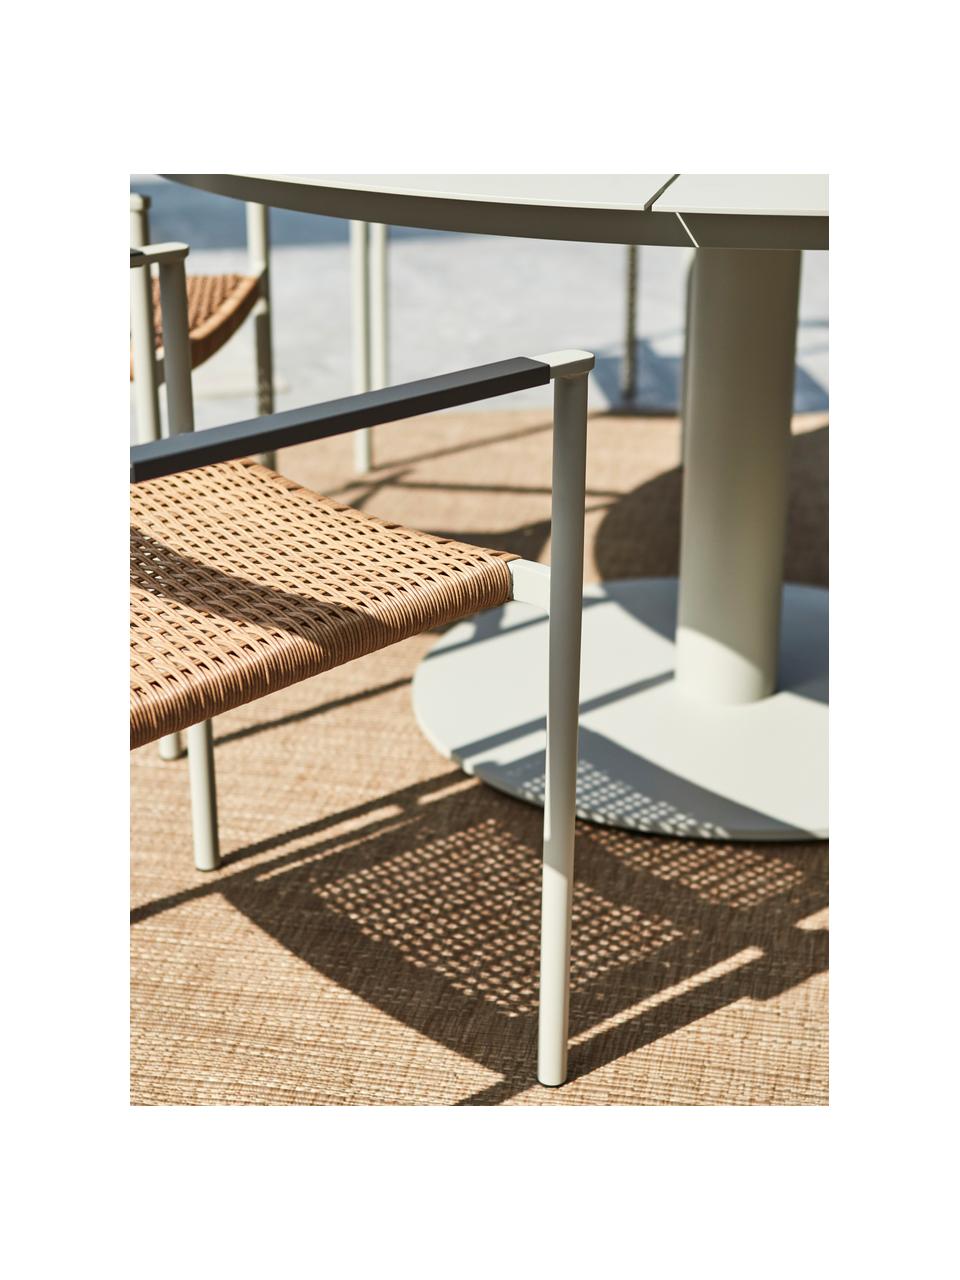 Gartenstühle DK, 2 Stück, Gestell: Aluminium, beschichtet, Sitzfläche: Polyrattan, Salbeigrün, Beige, B 55 x T 54 cm